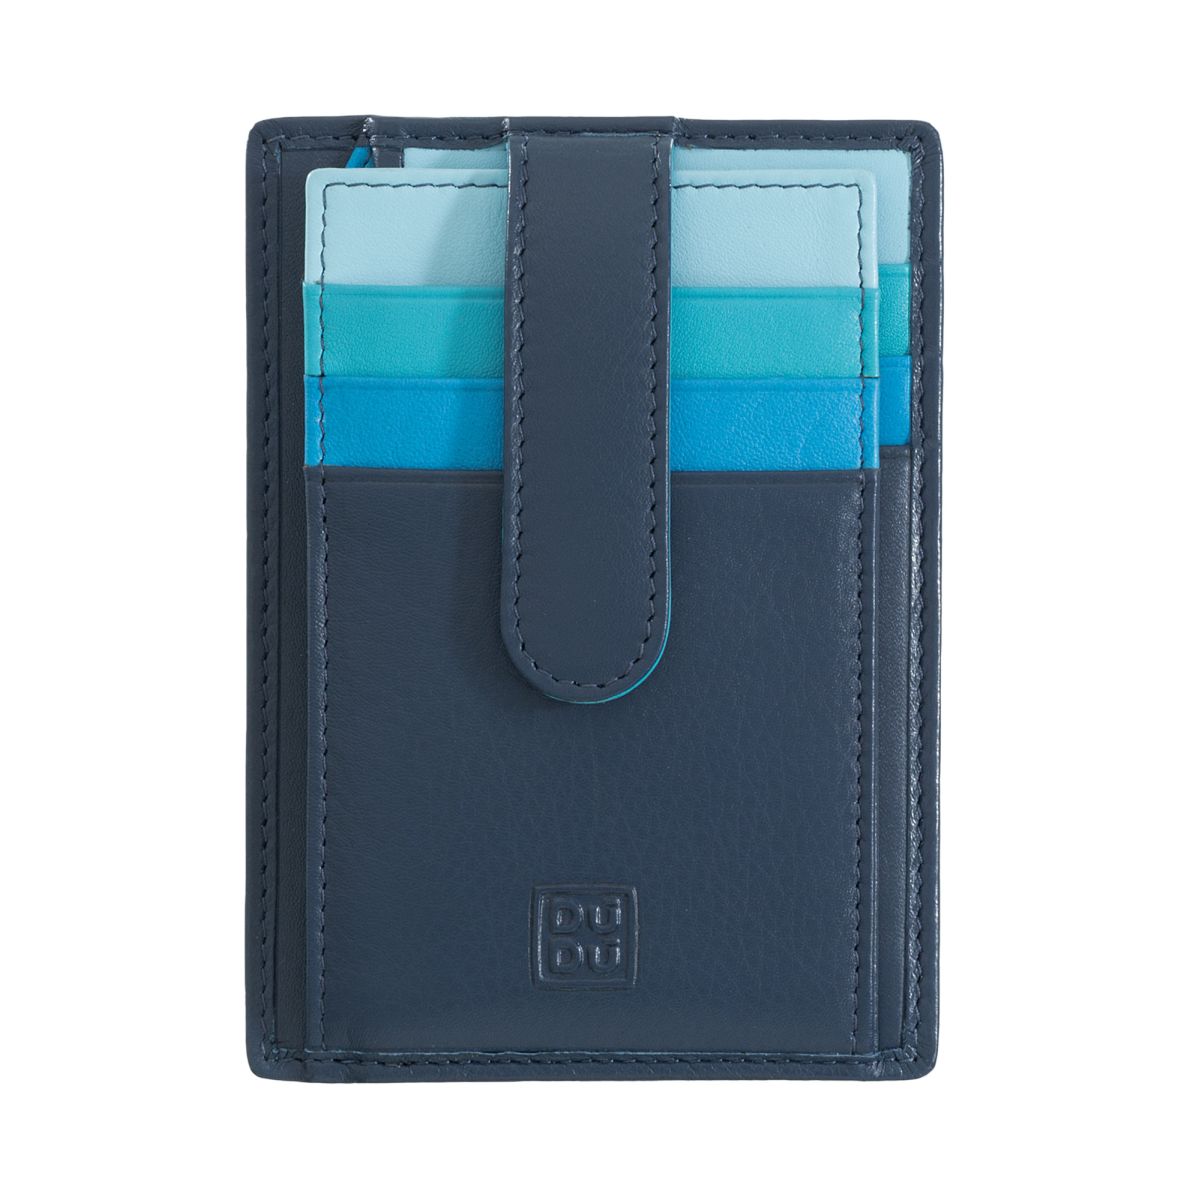 Compact multi color credit card holder wallet - Blue